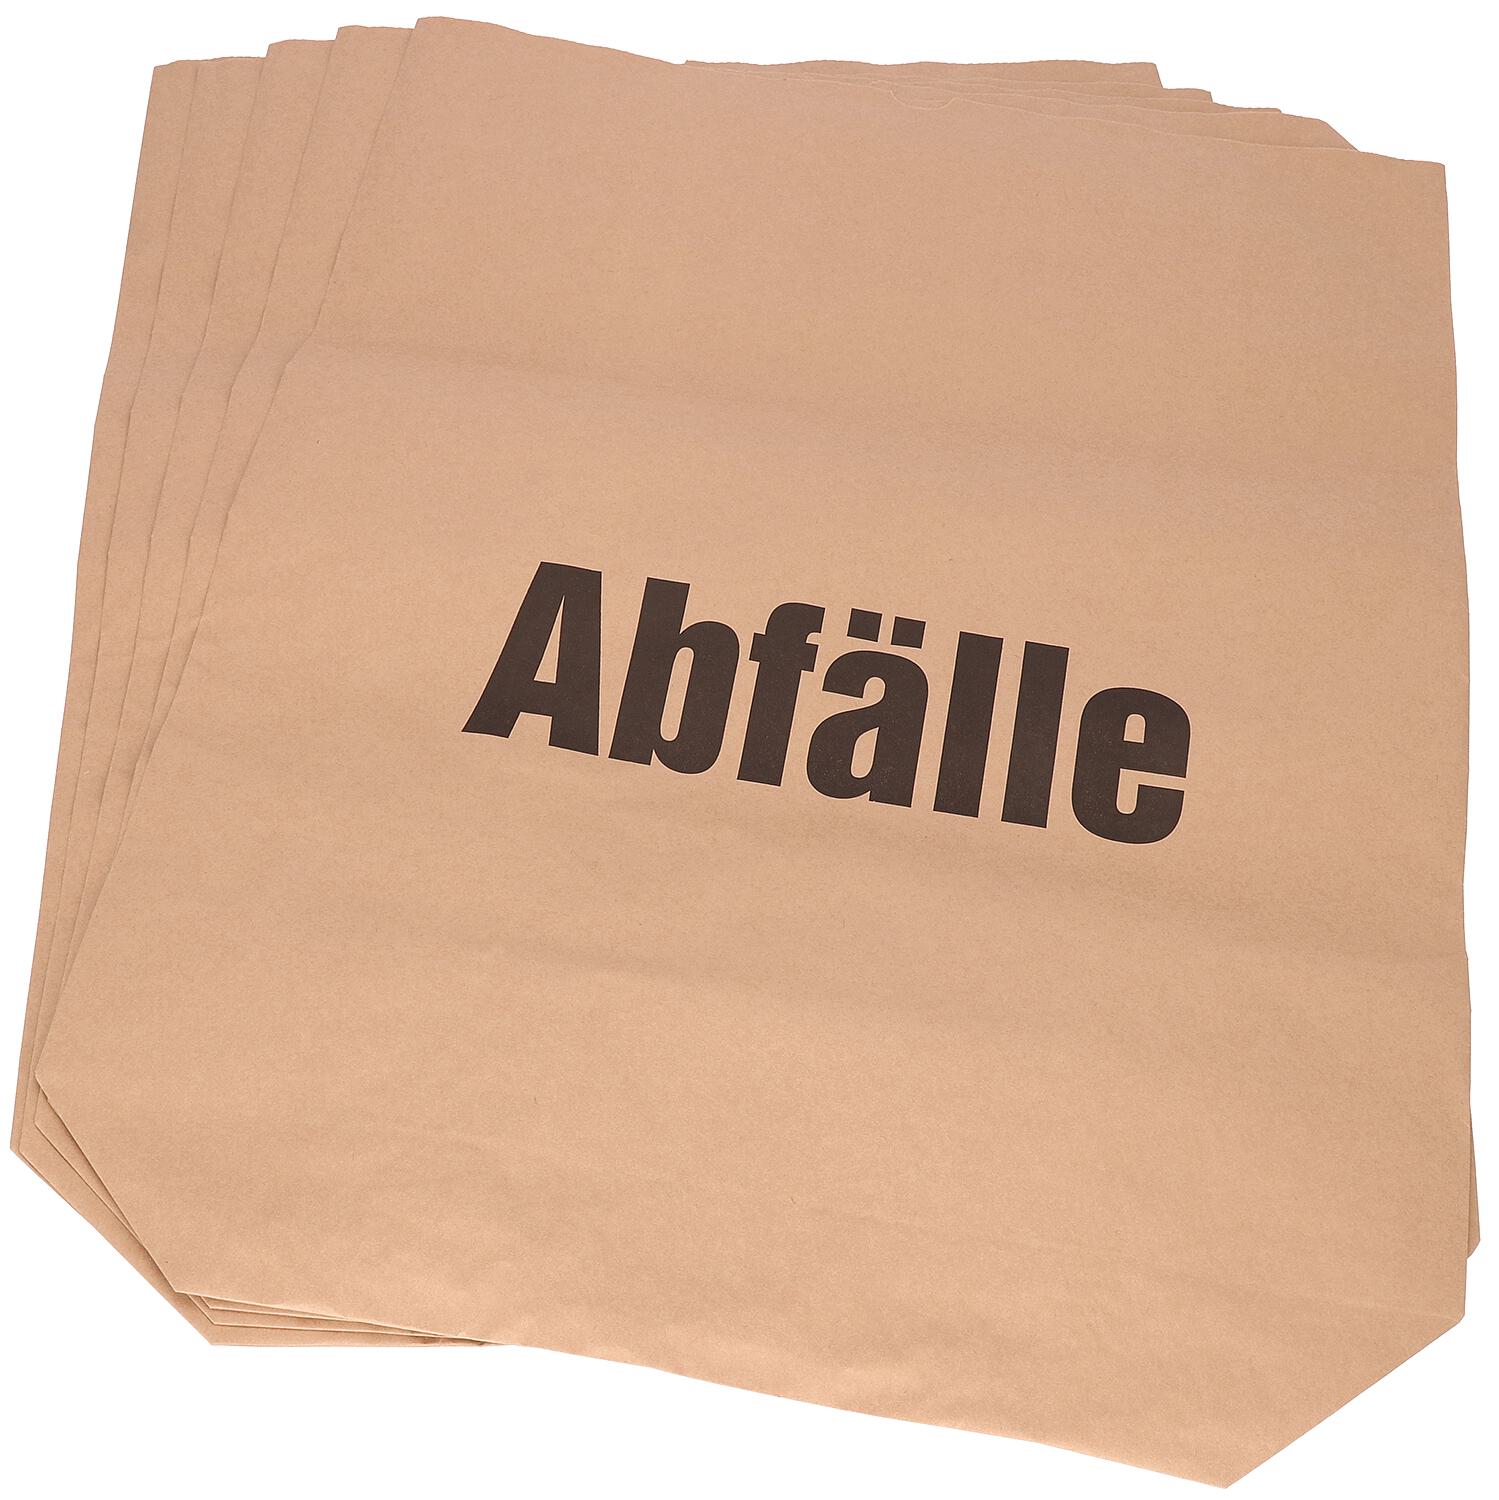 Papiersäcke braun 120 l, Kraftsackpapier nassfest Aufdruck: "ABFÄLLE", VPE 25 Stück